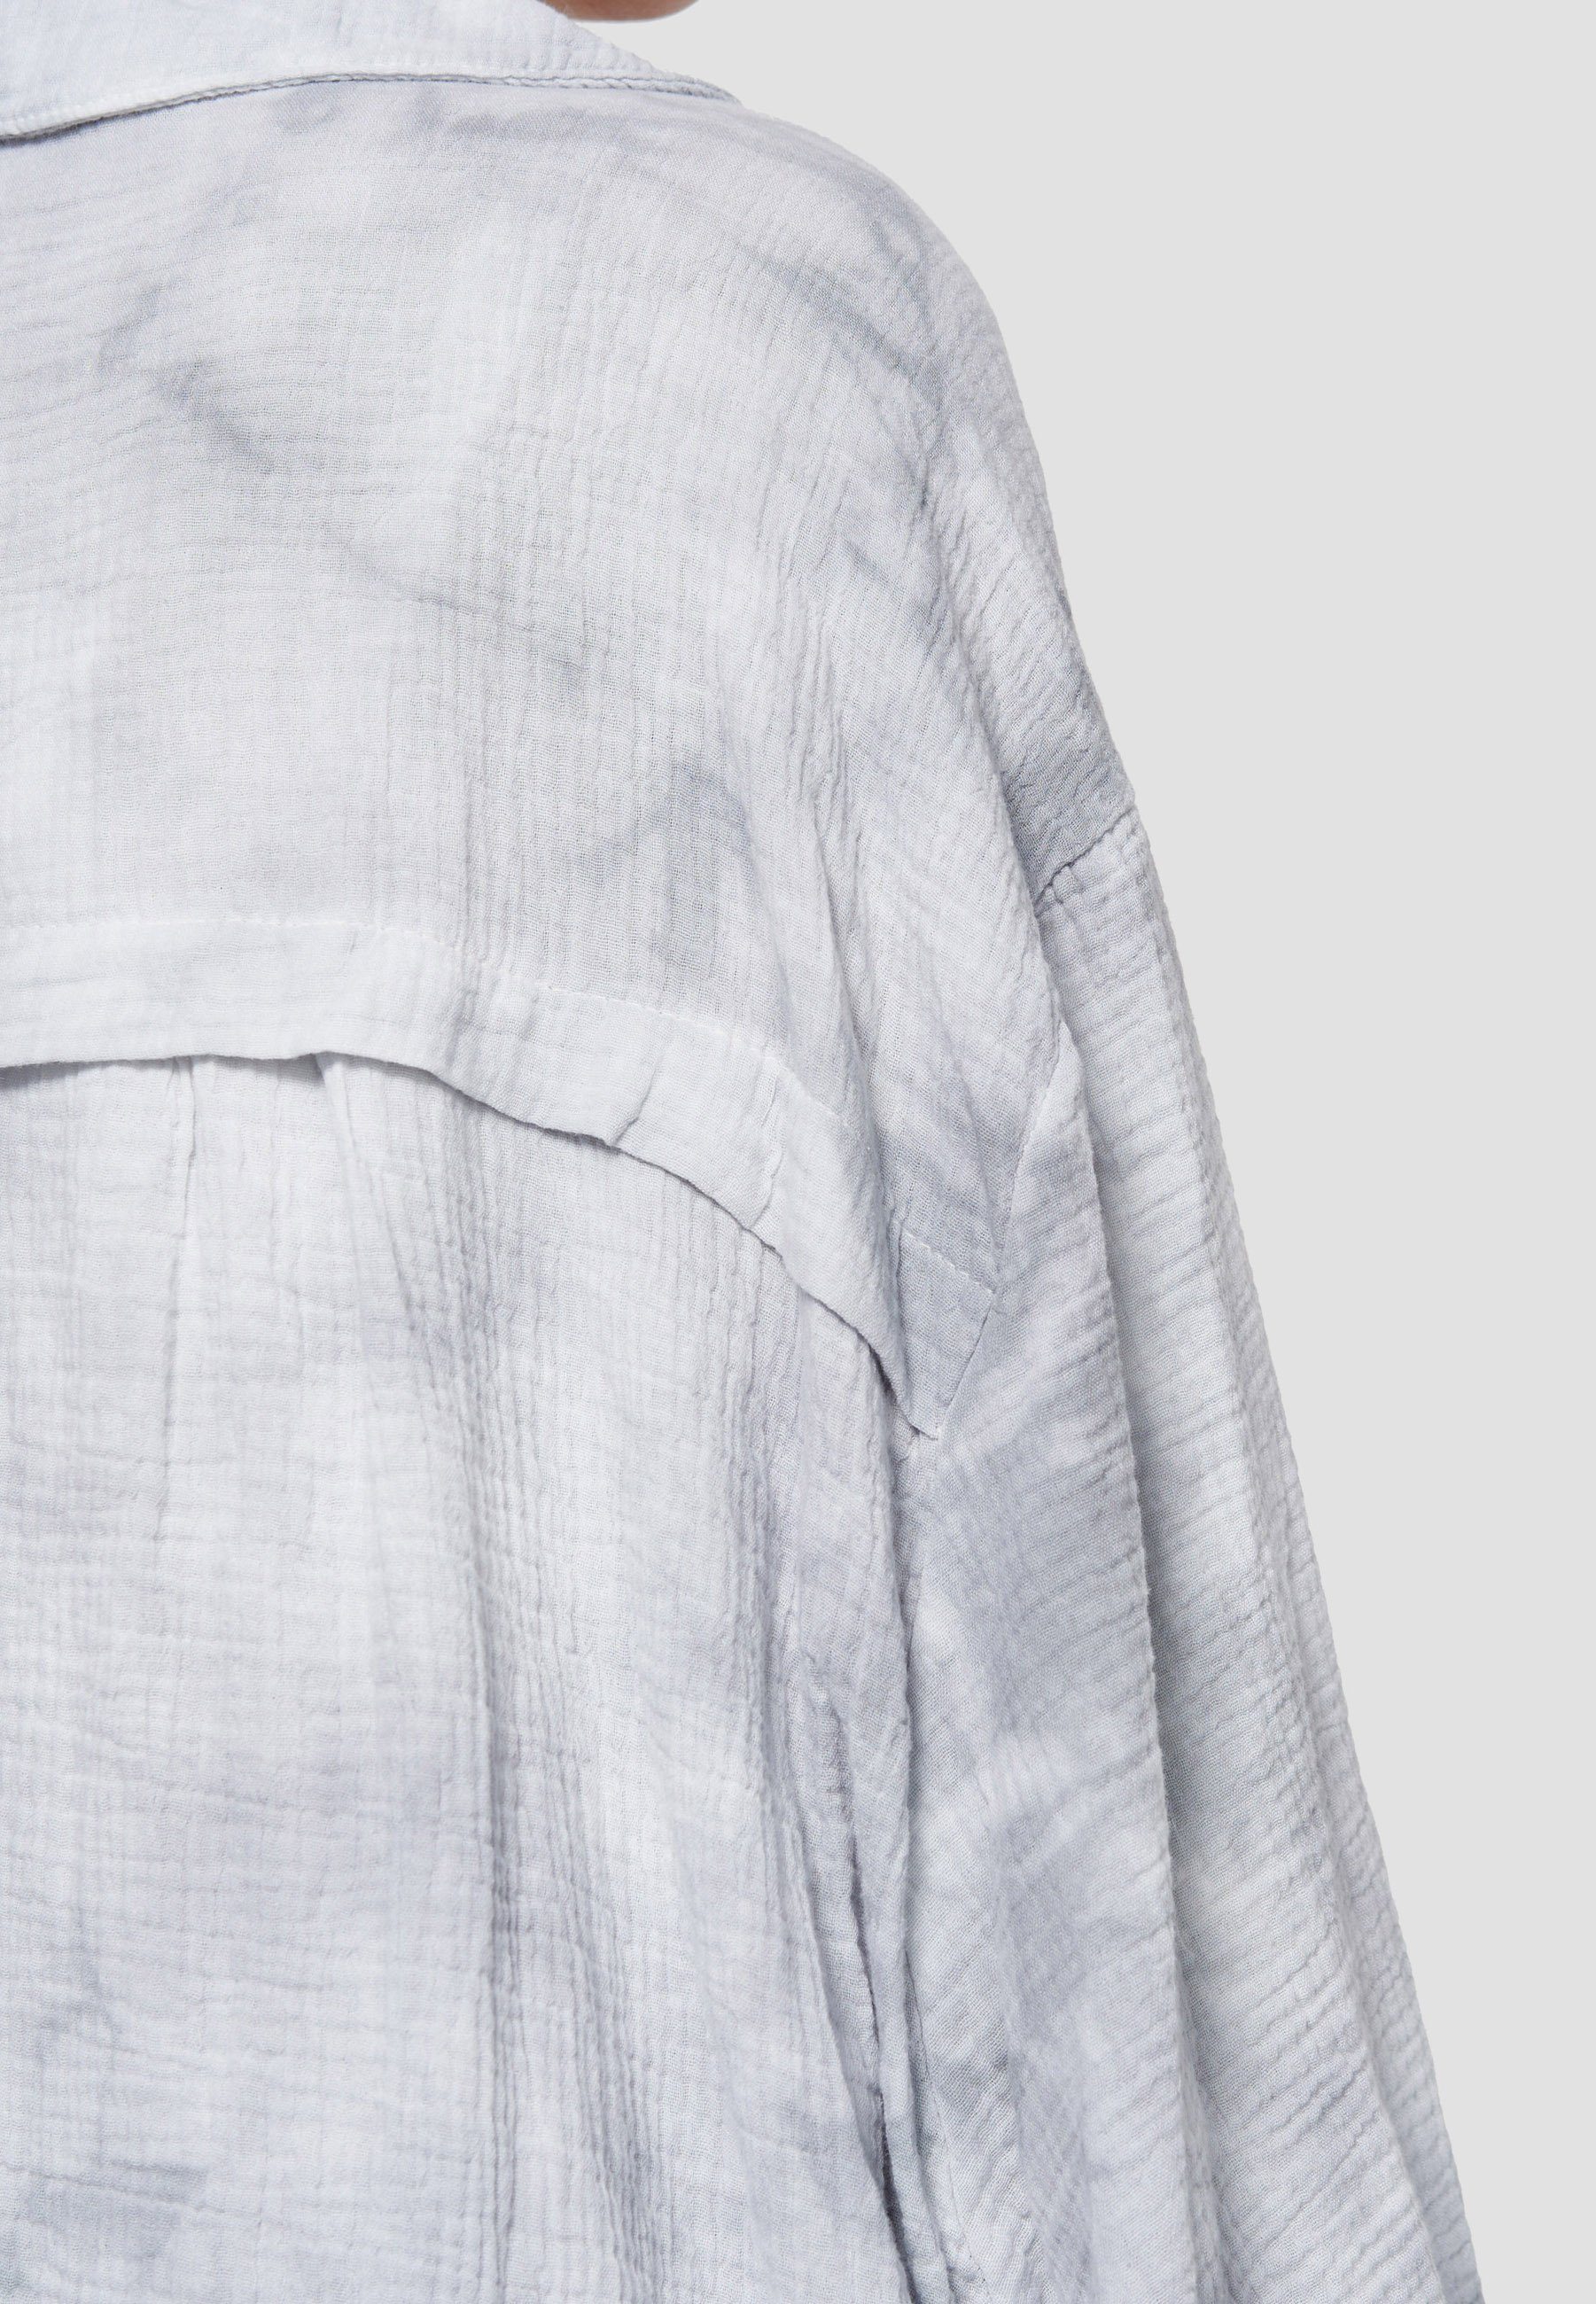 Damen Blusen Decay Klassische Bluse in tollem Design